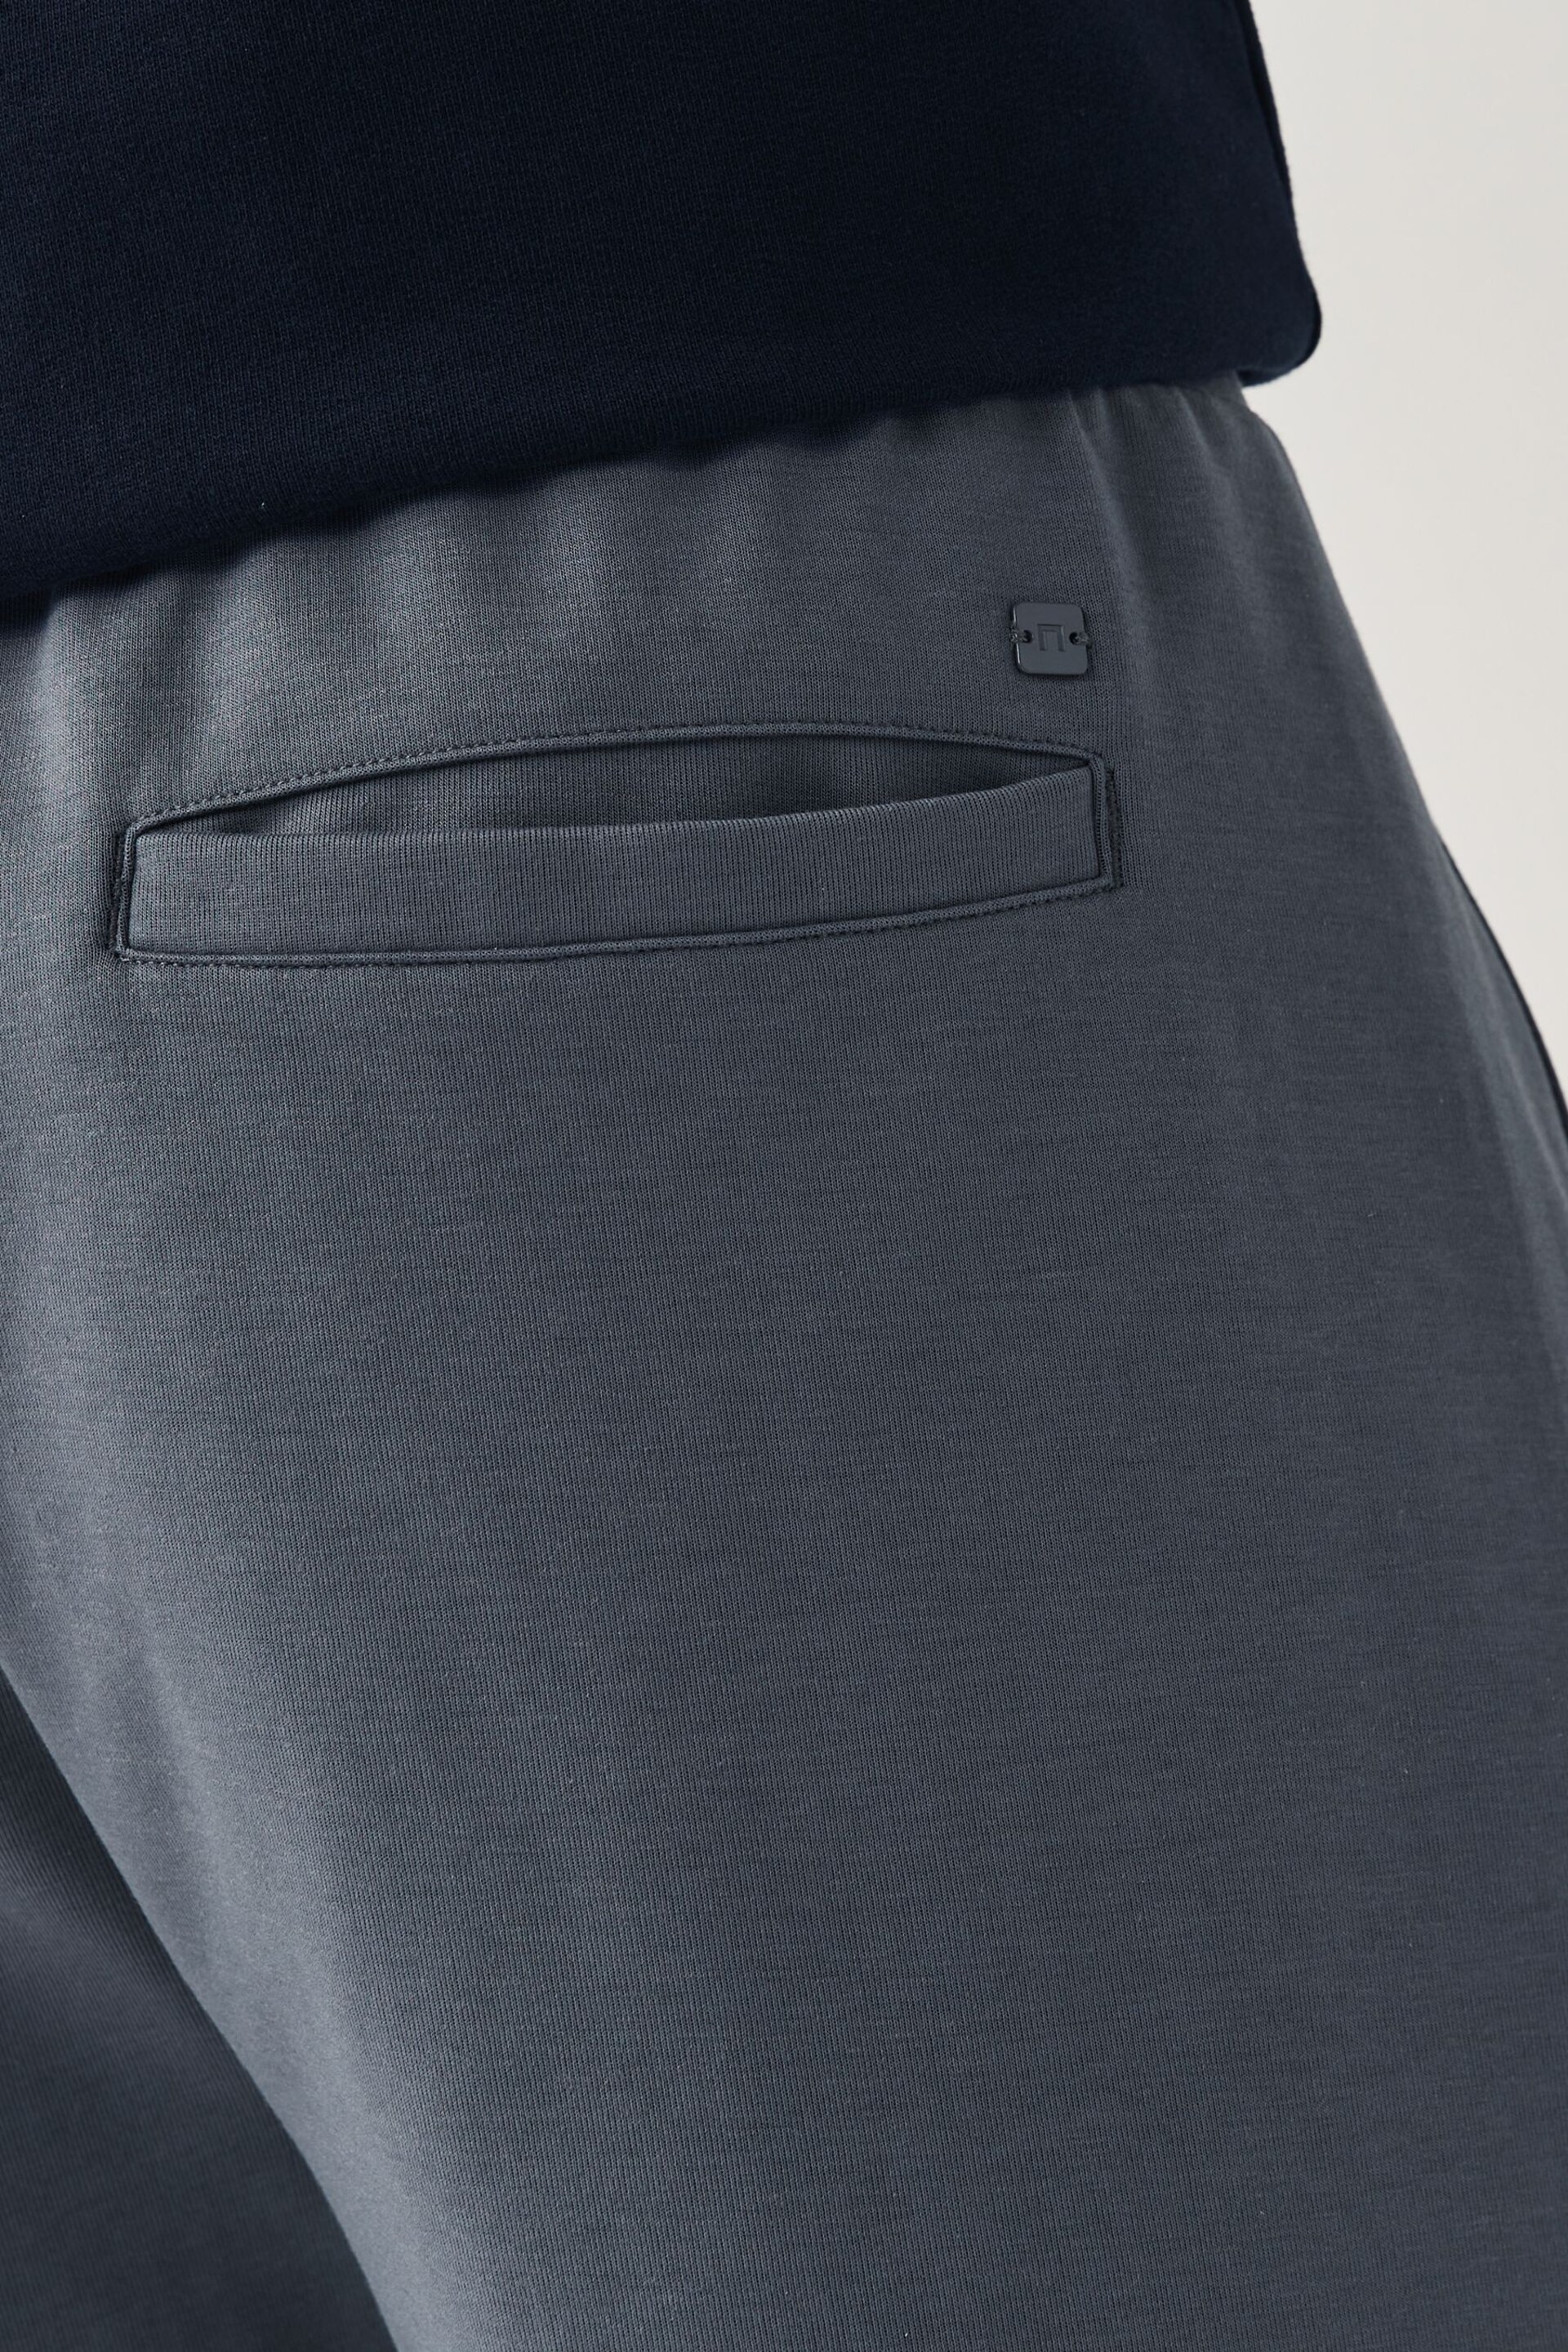 Navy Slim Zip Pocket Jersey Shorts - Image 9 of 9